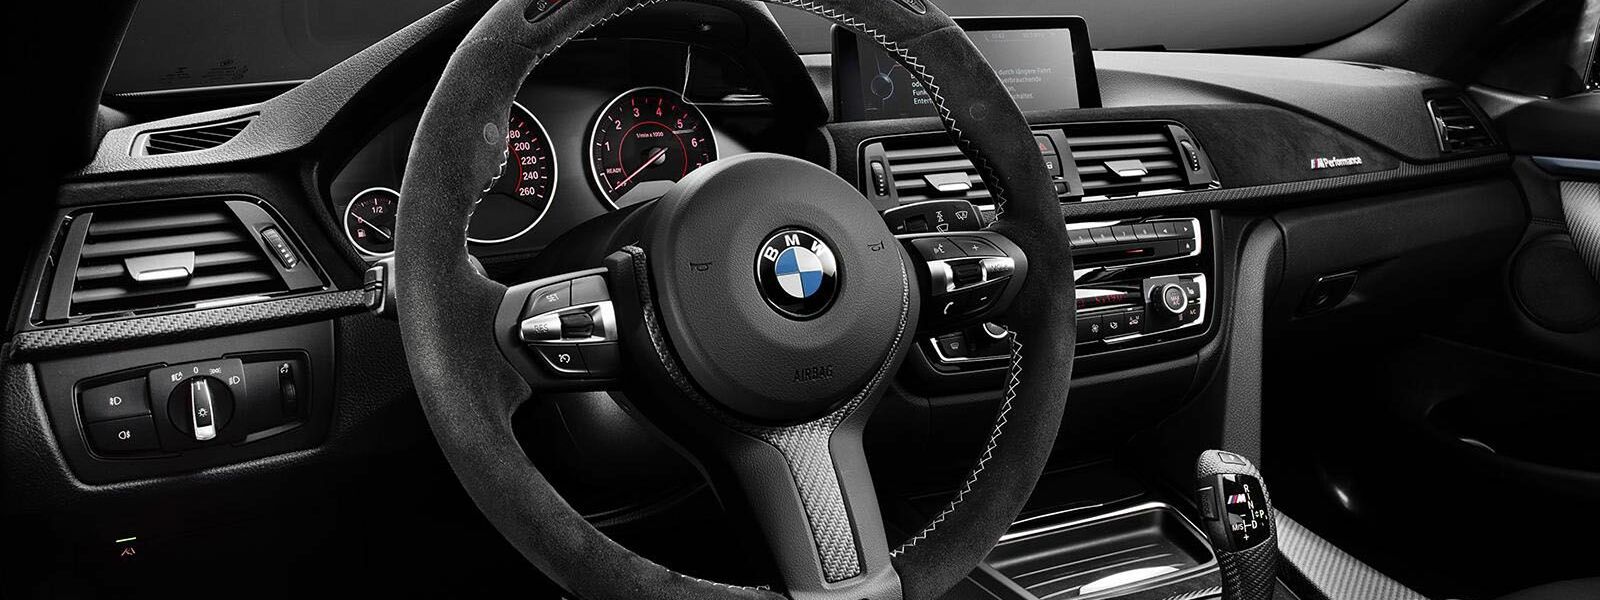 Interior BMW M5 F10